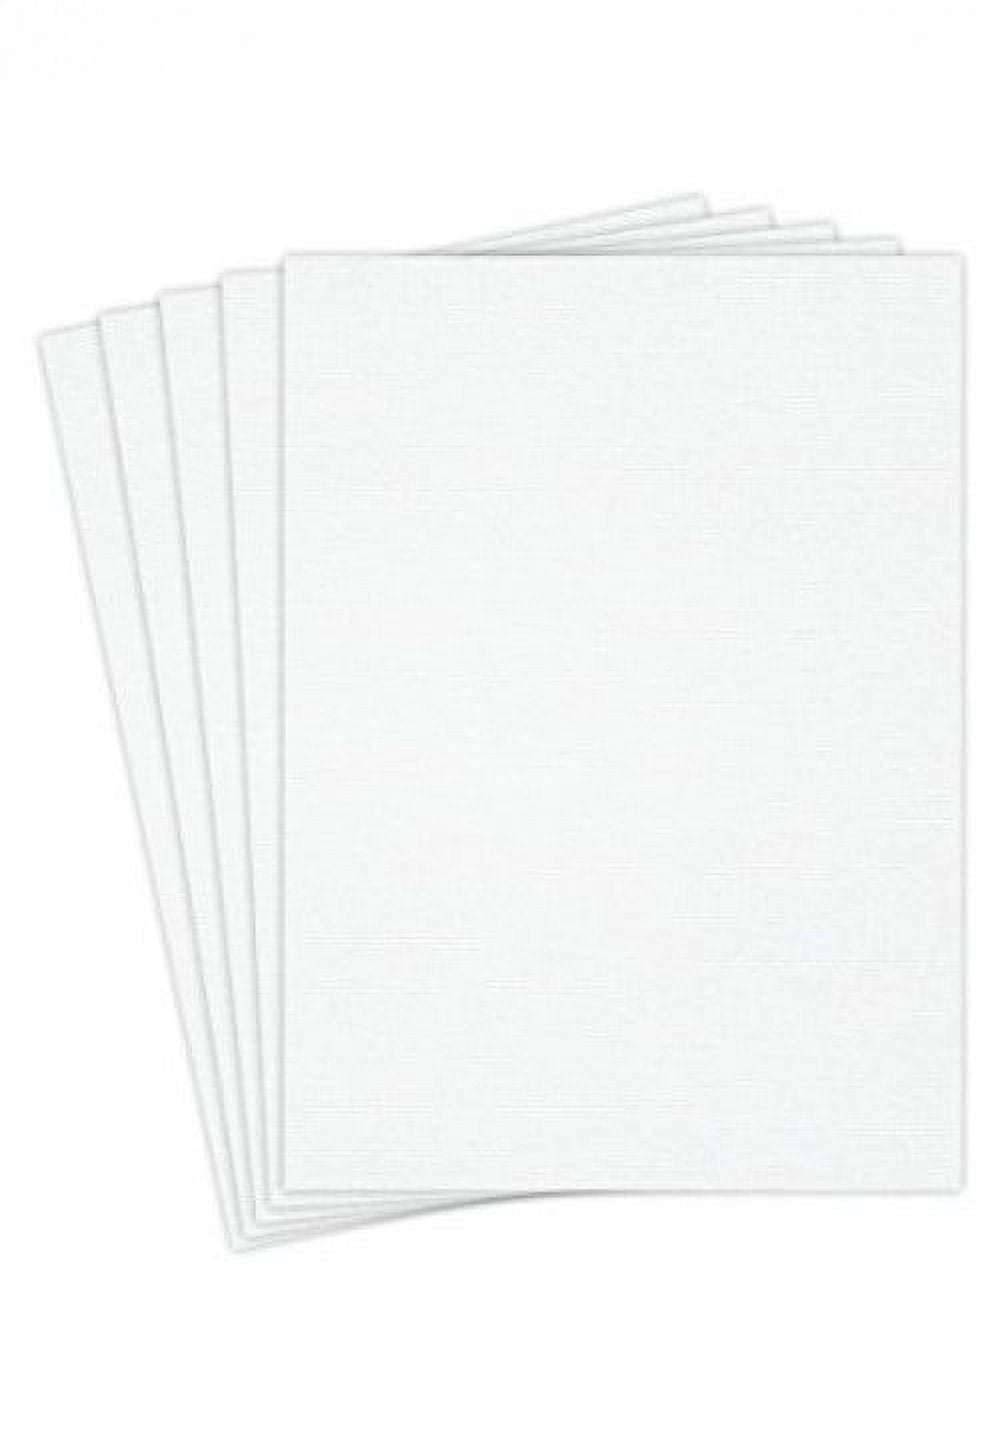 Pen + Gear White Premium Card Stock, 8.5 x 11, 110 lb, 150 Sheets